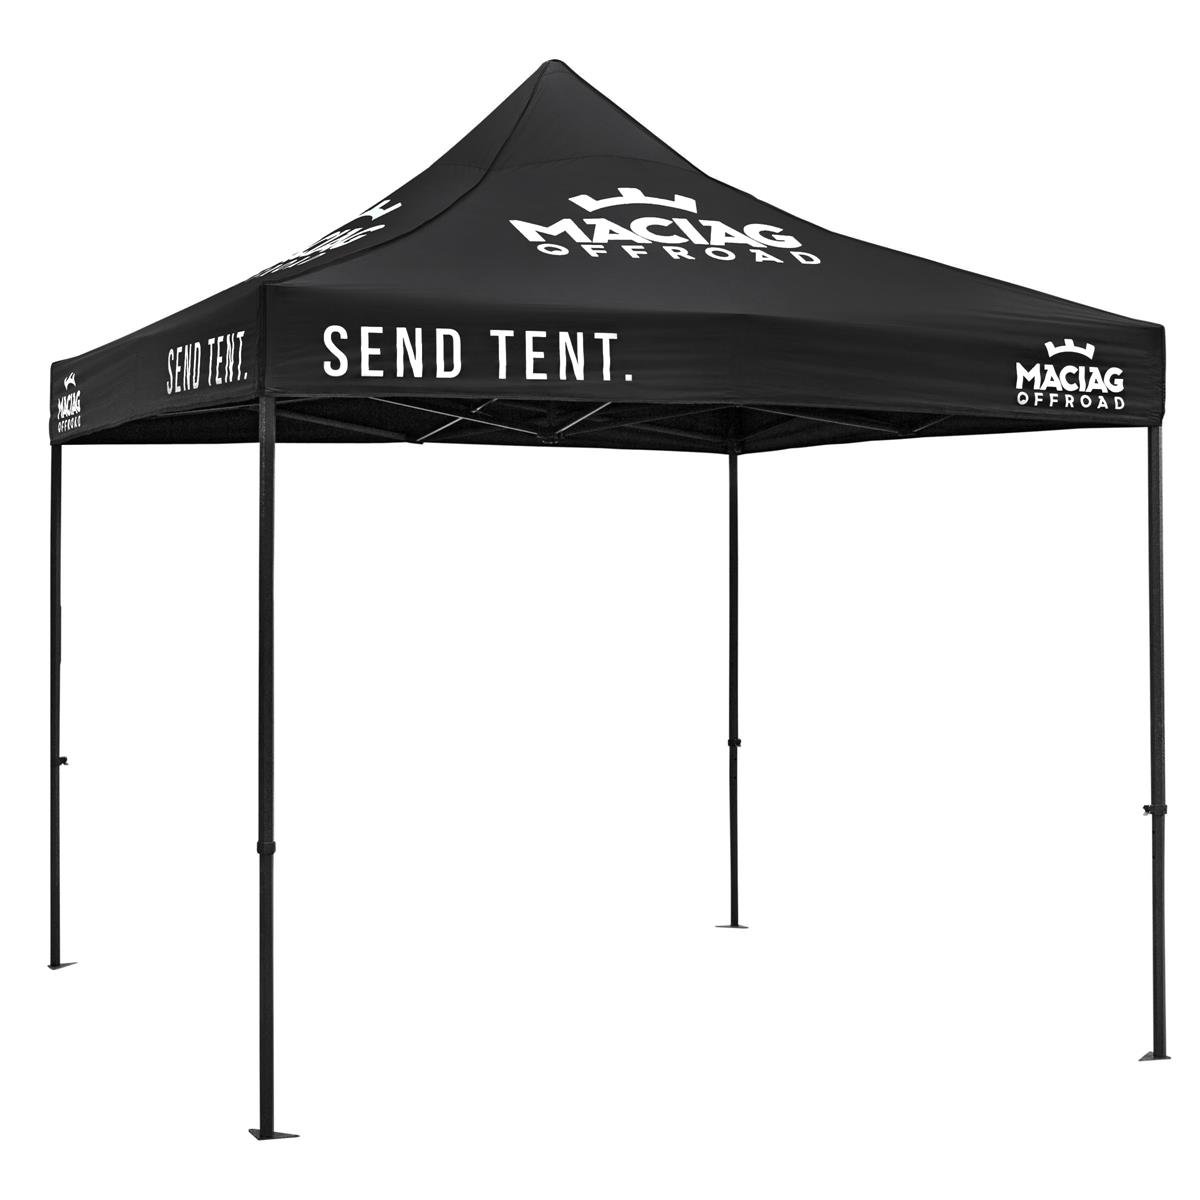 Maciag Offroad Tente Paddock 3x3 m SEND TENT. Standard, sans cloisons -  Noir/Blanc